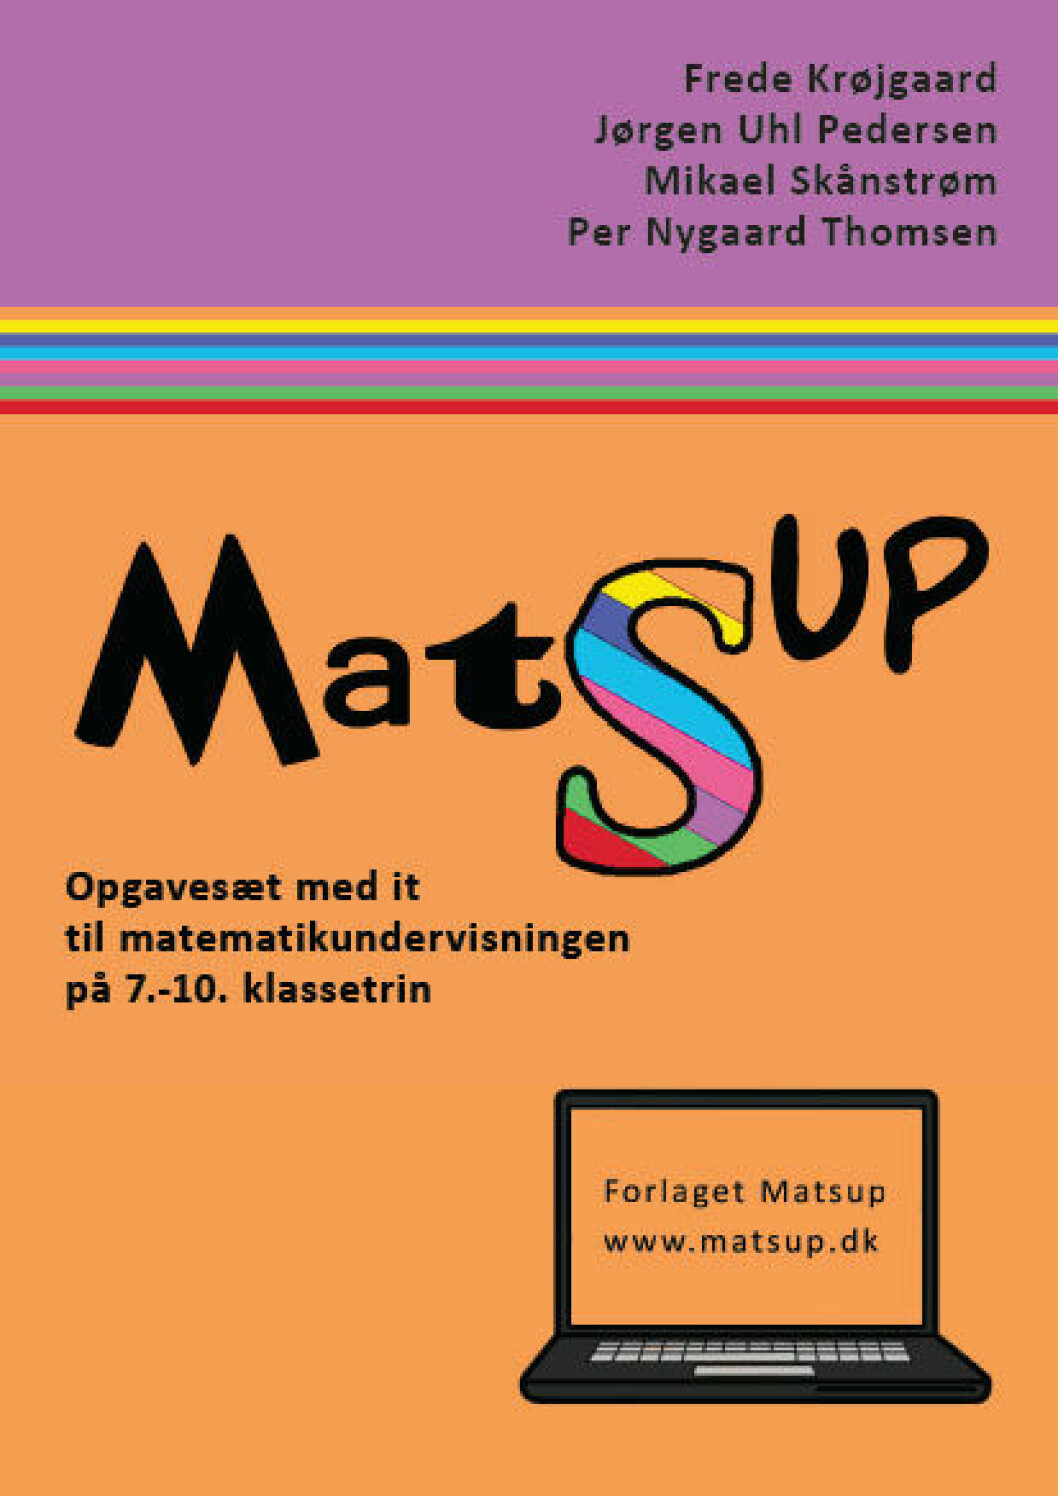 MatSup